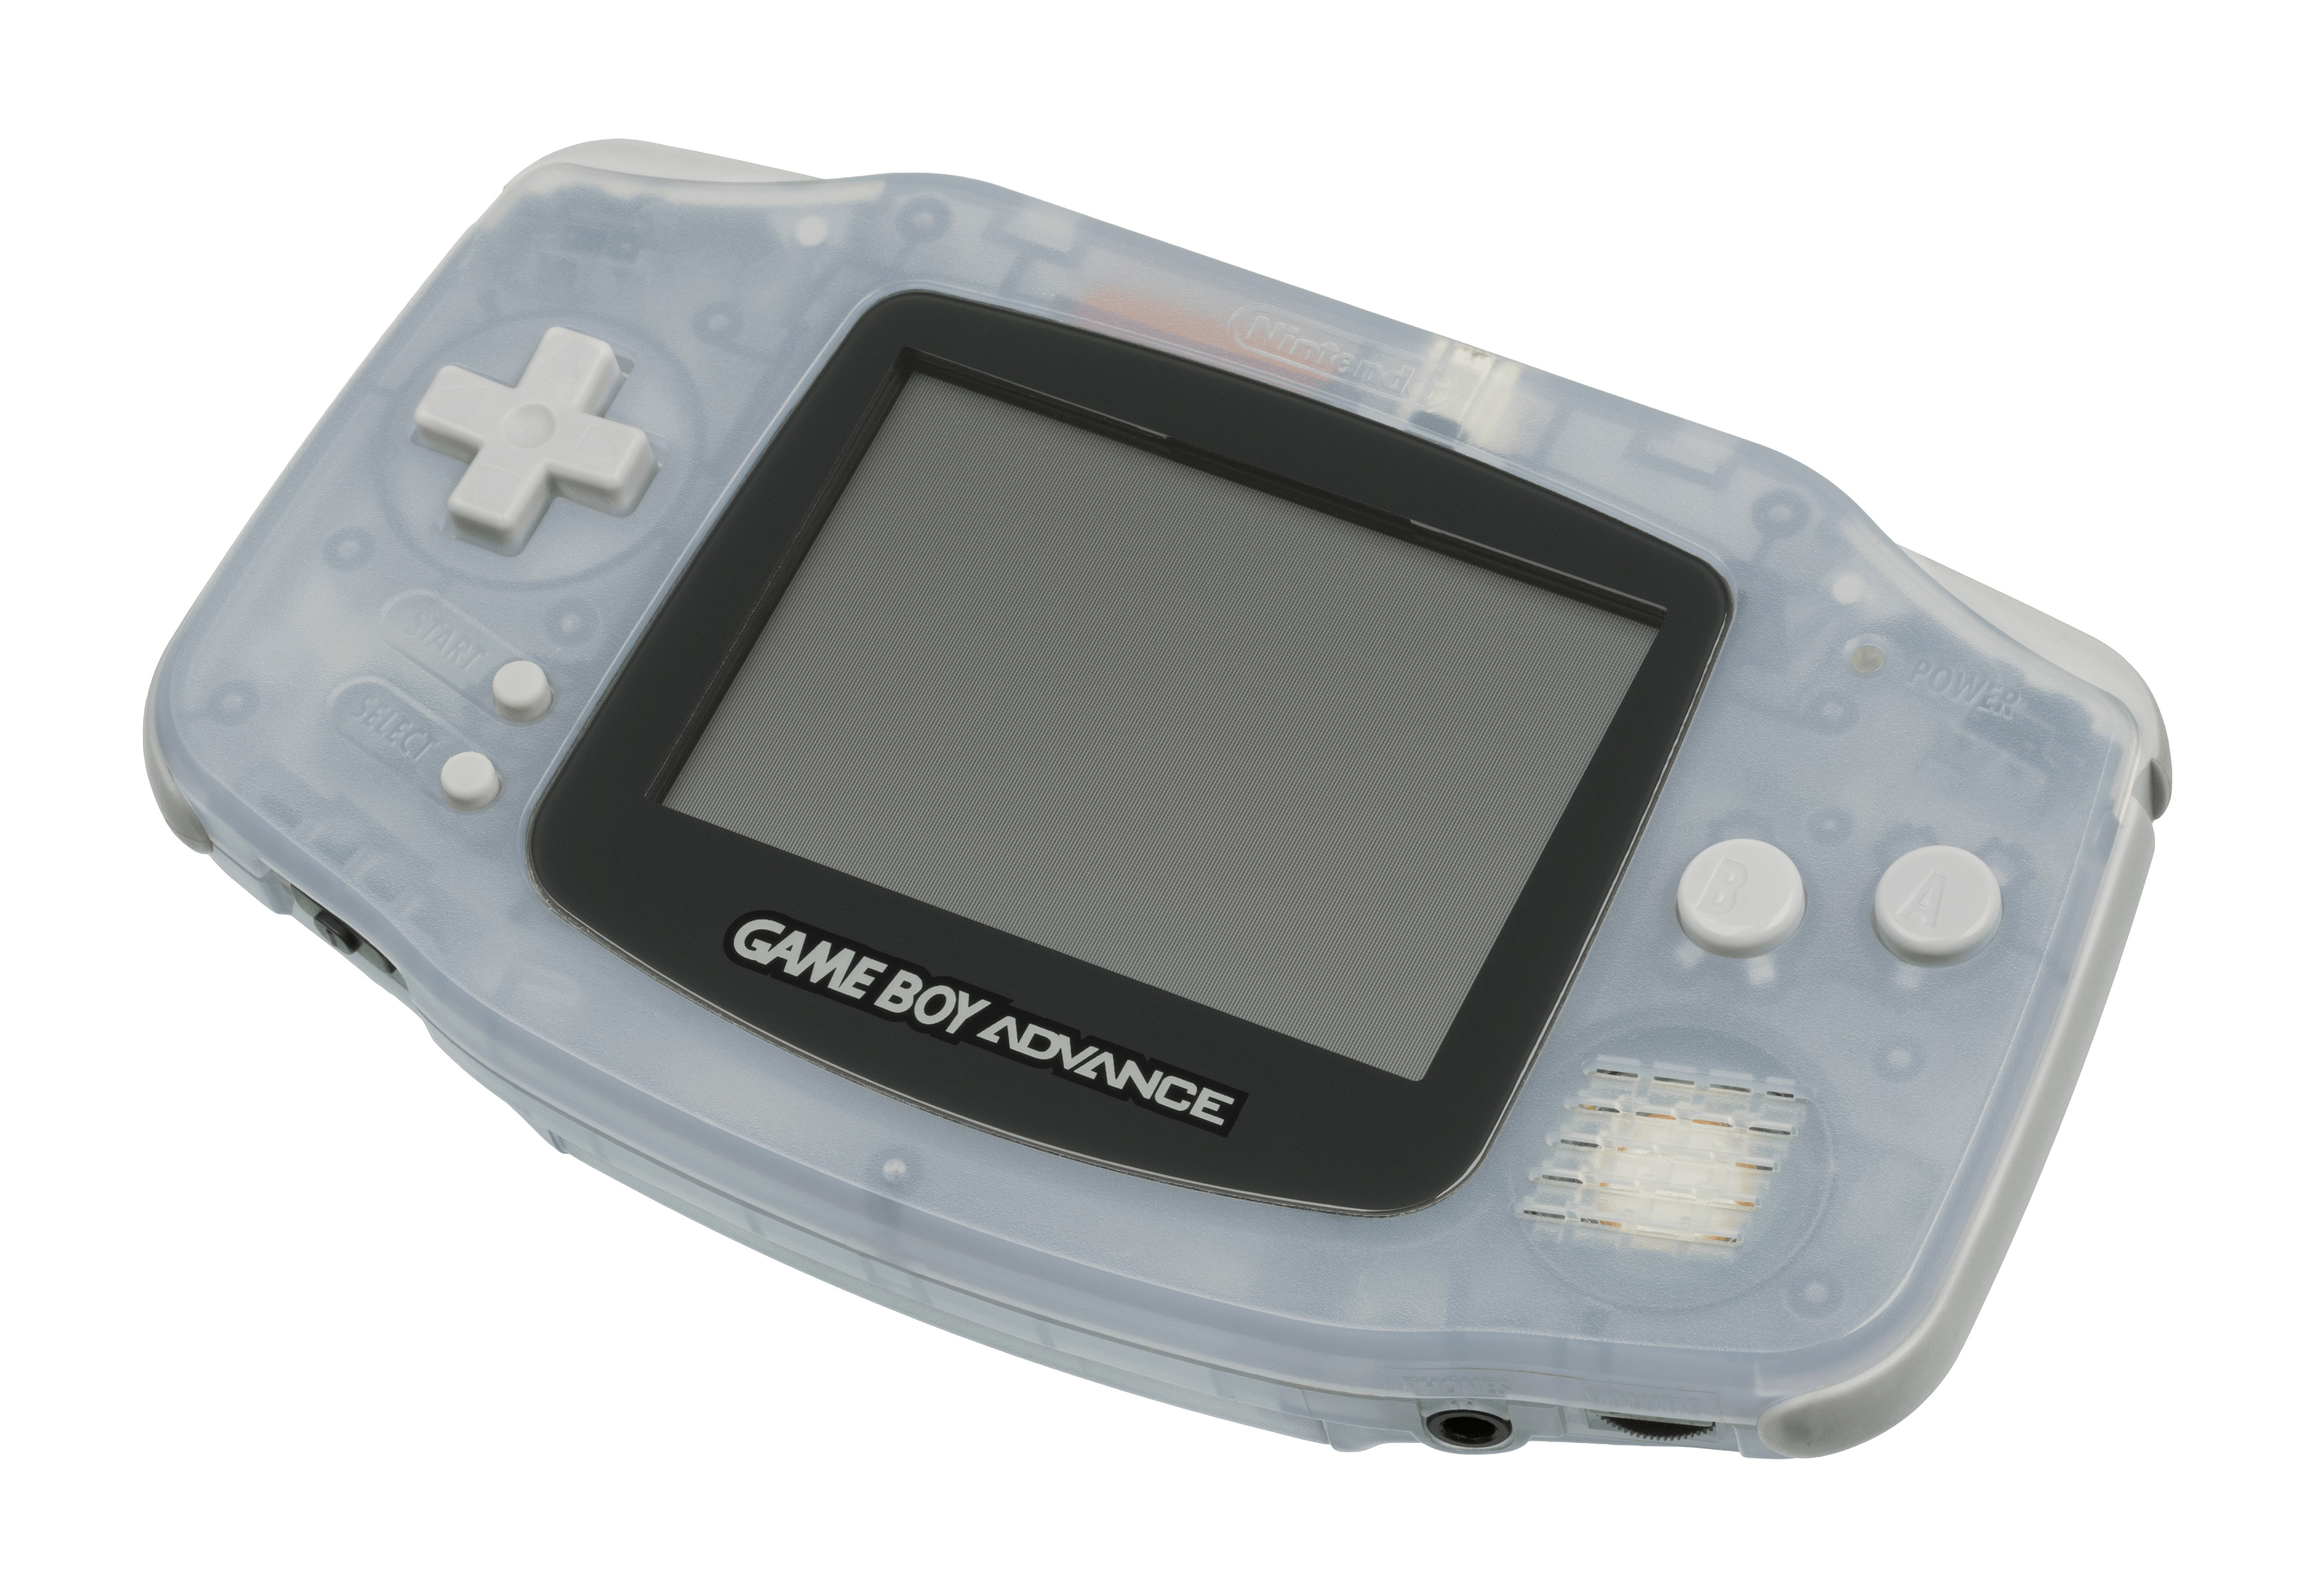 Nintendo Game Boy Advance icons